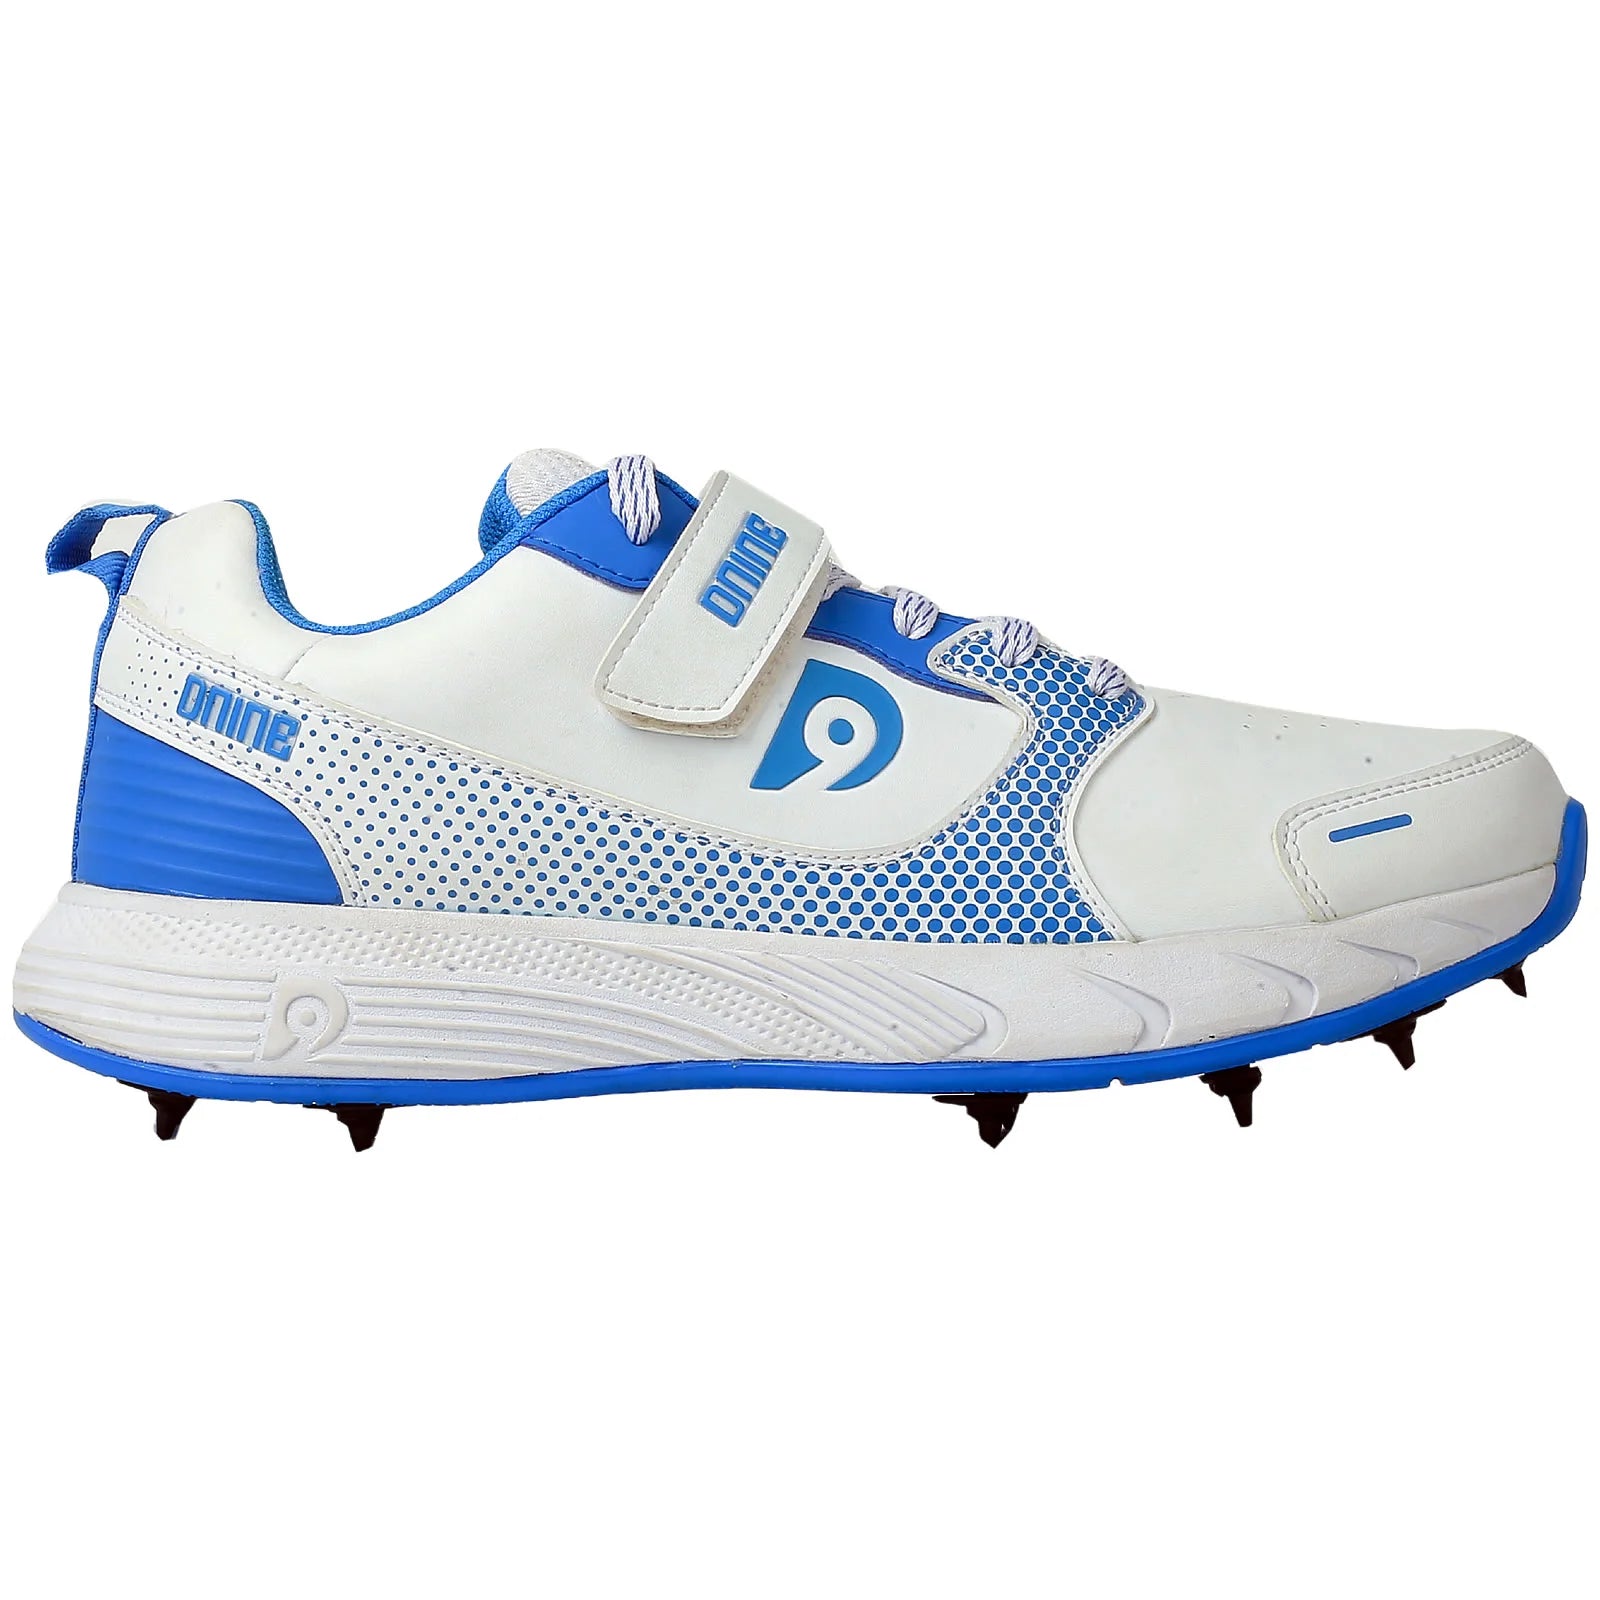 DNINE Polyurethane (PU) Force Blue/White Cricket Metal Spike Shoes